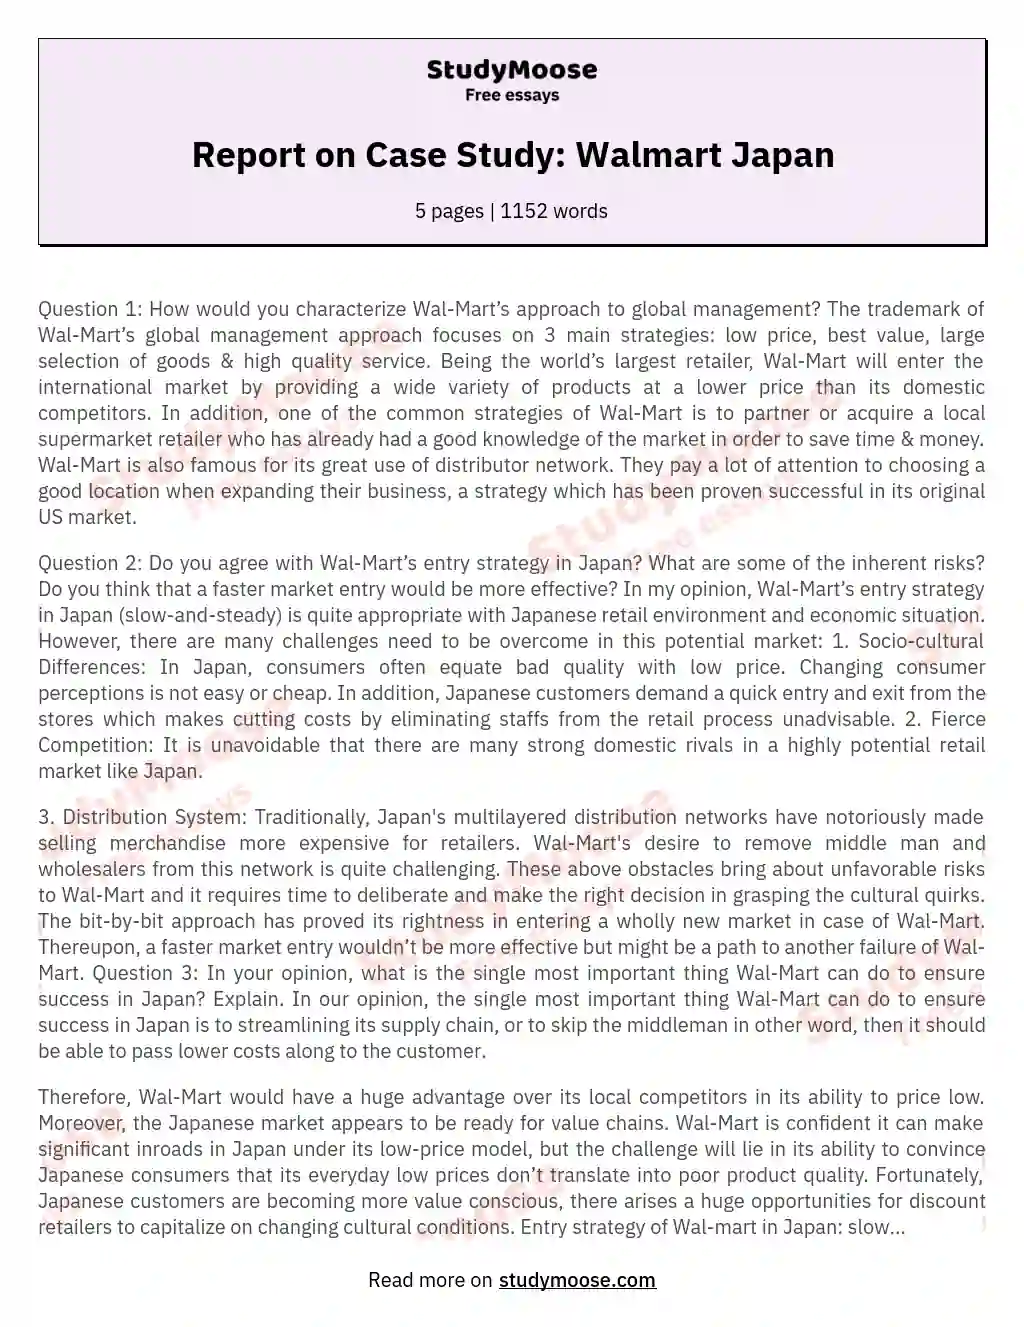 Report on Case Study: Walmart Japan essay